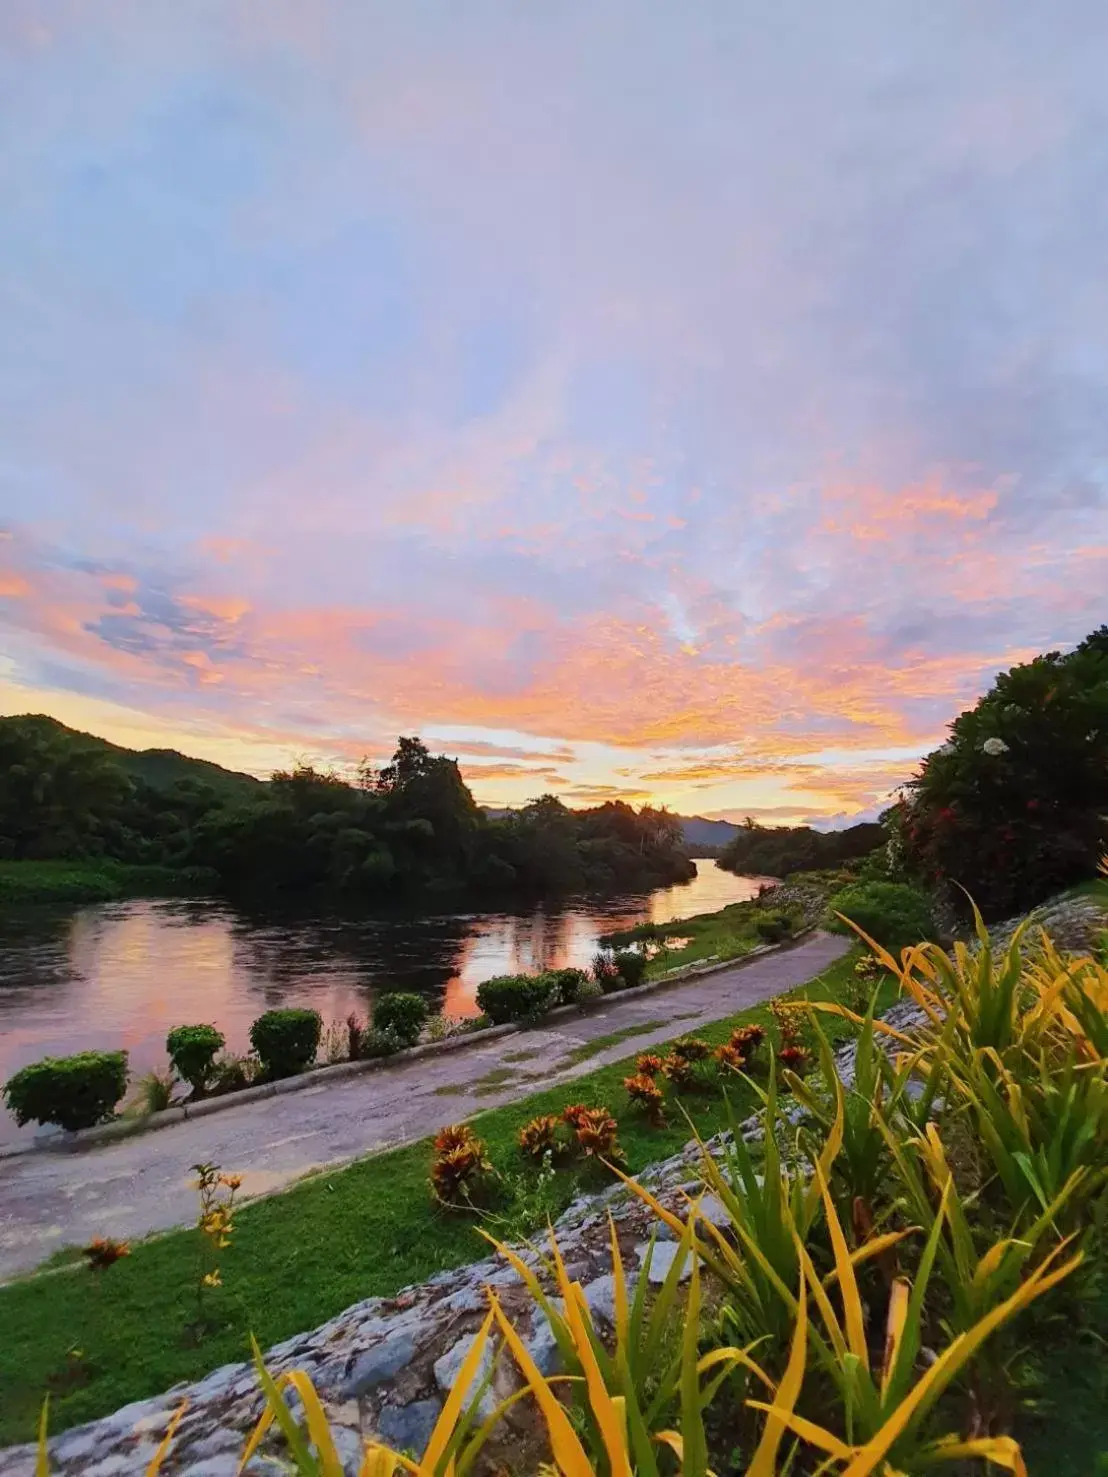 Natural landscape in Aekpailin River Kwai Resort